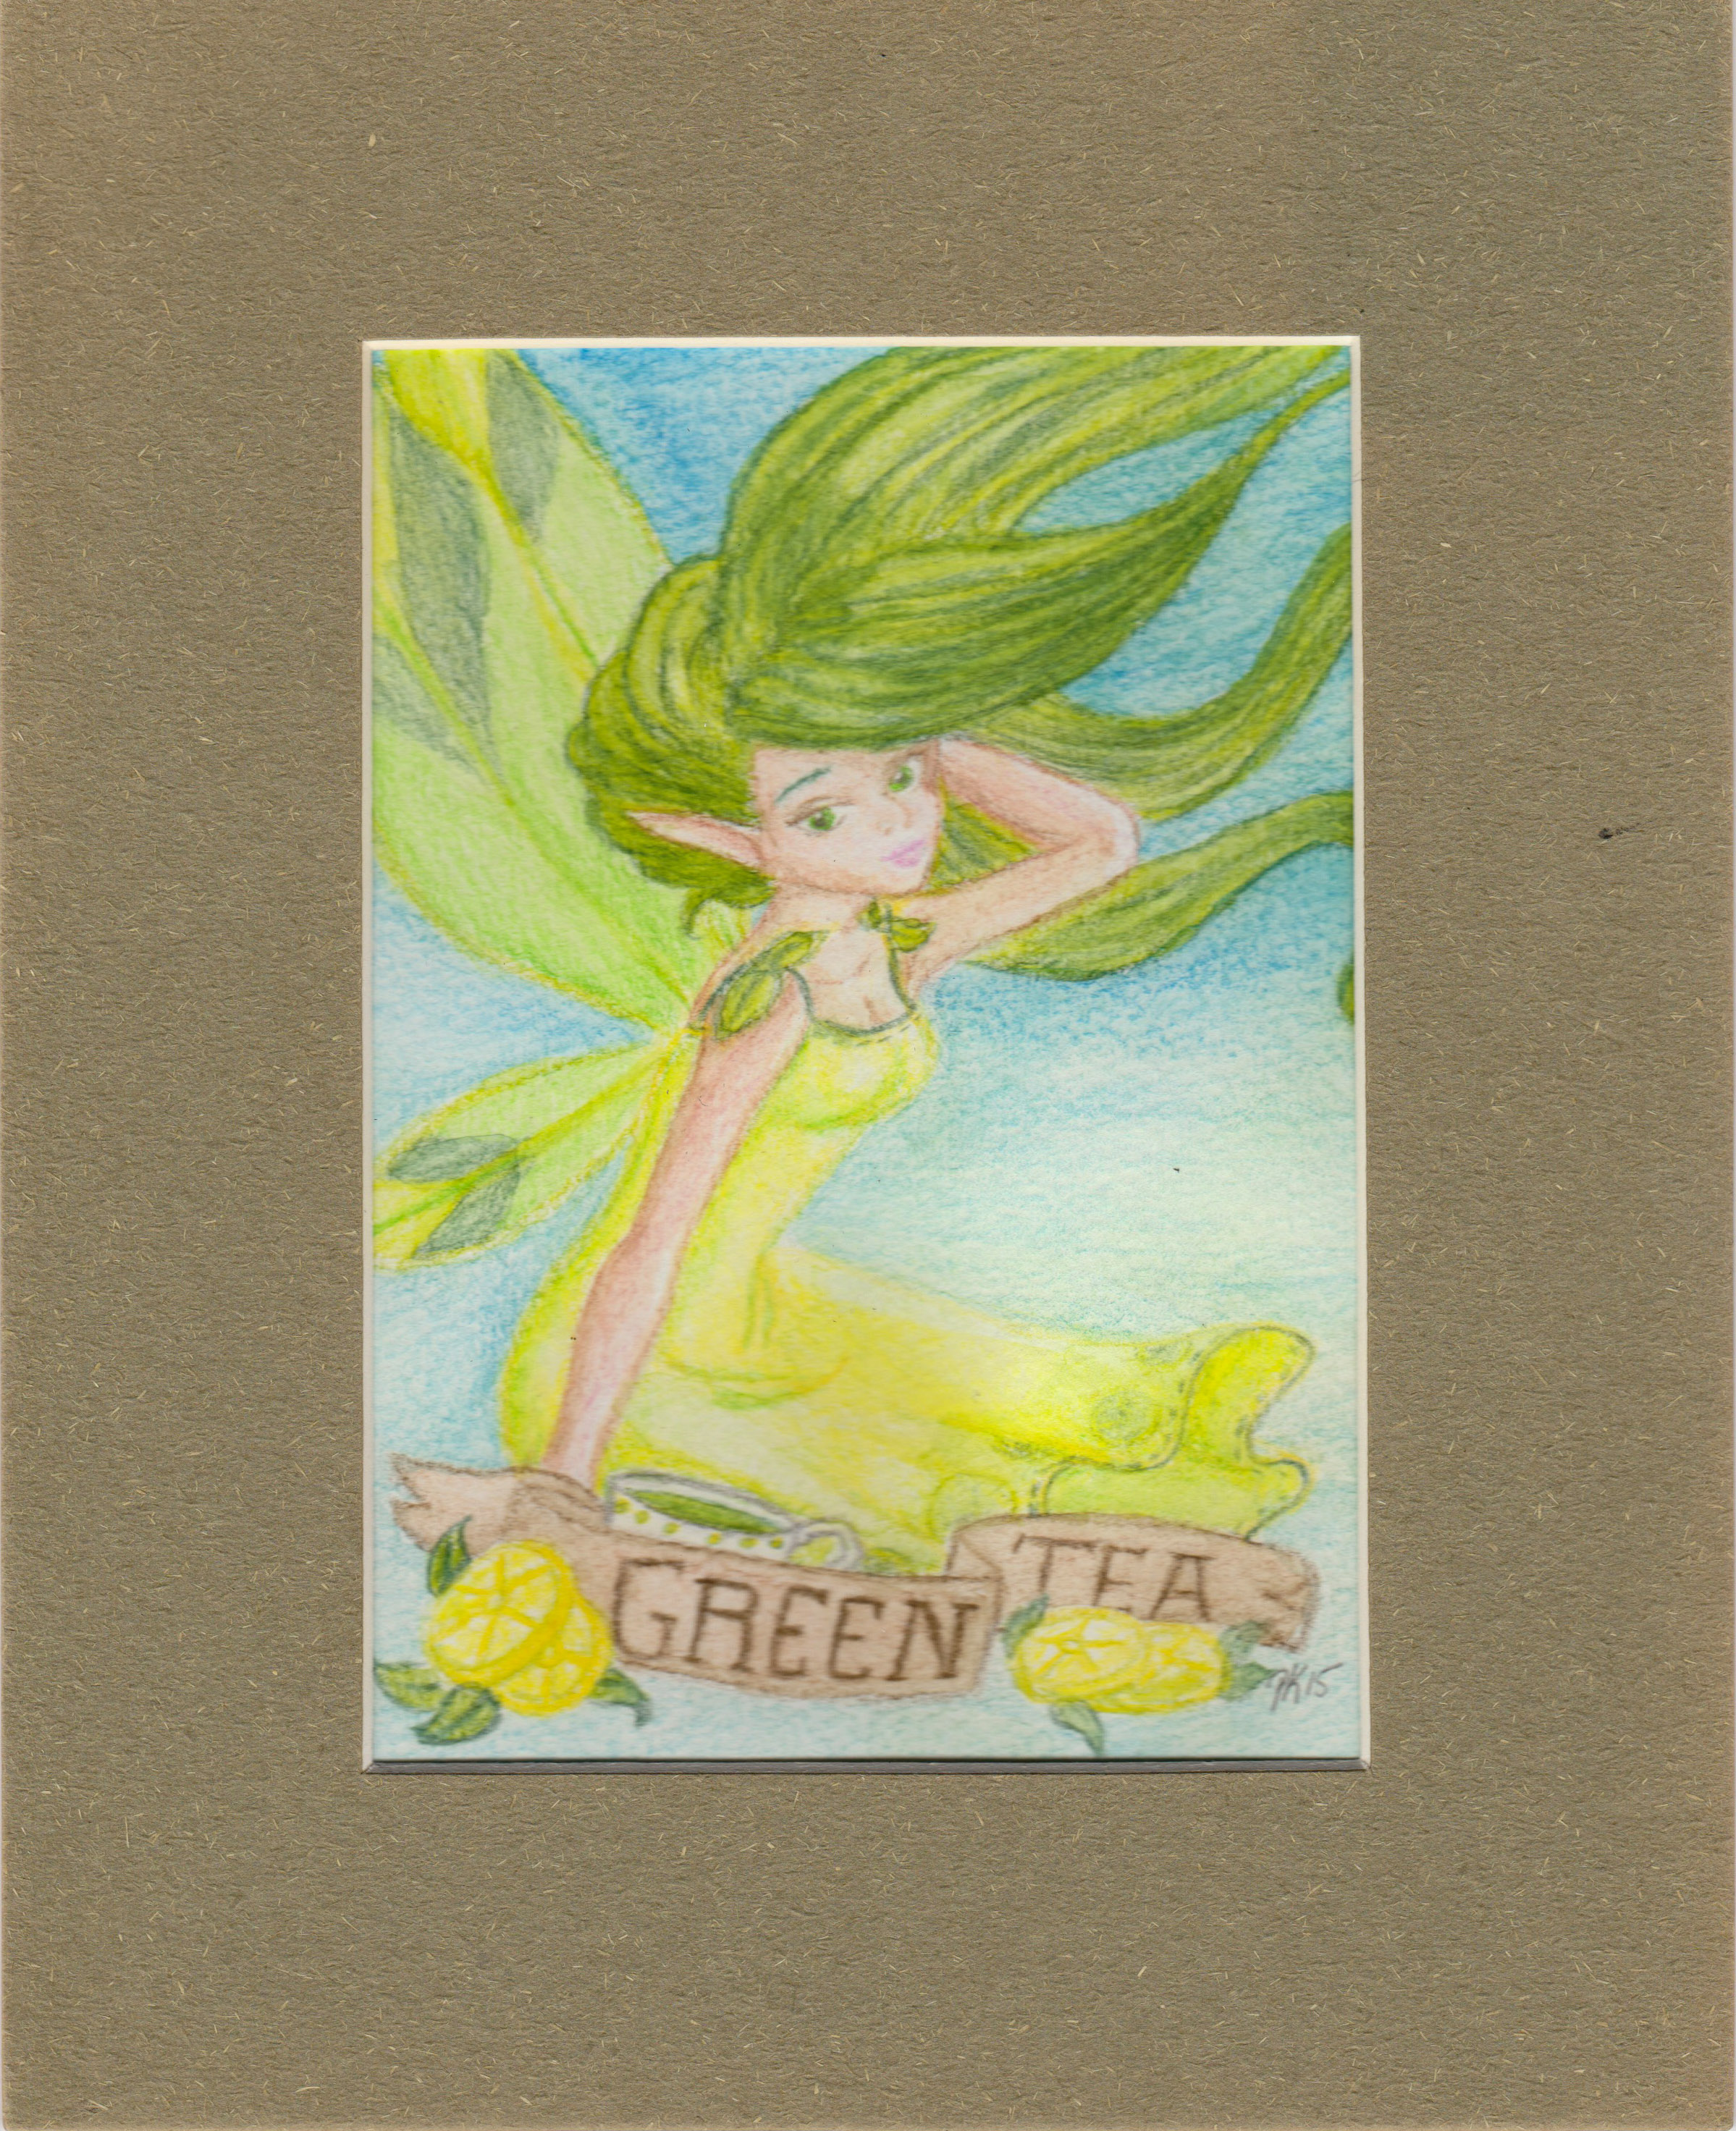 Green Tea fairy